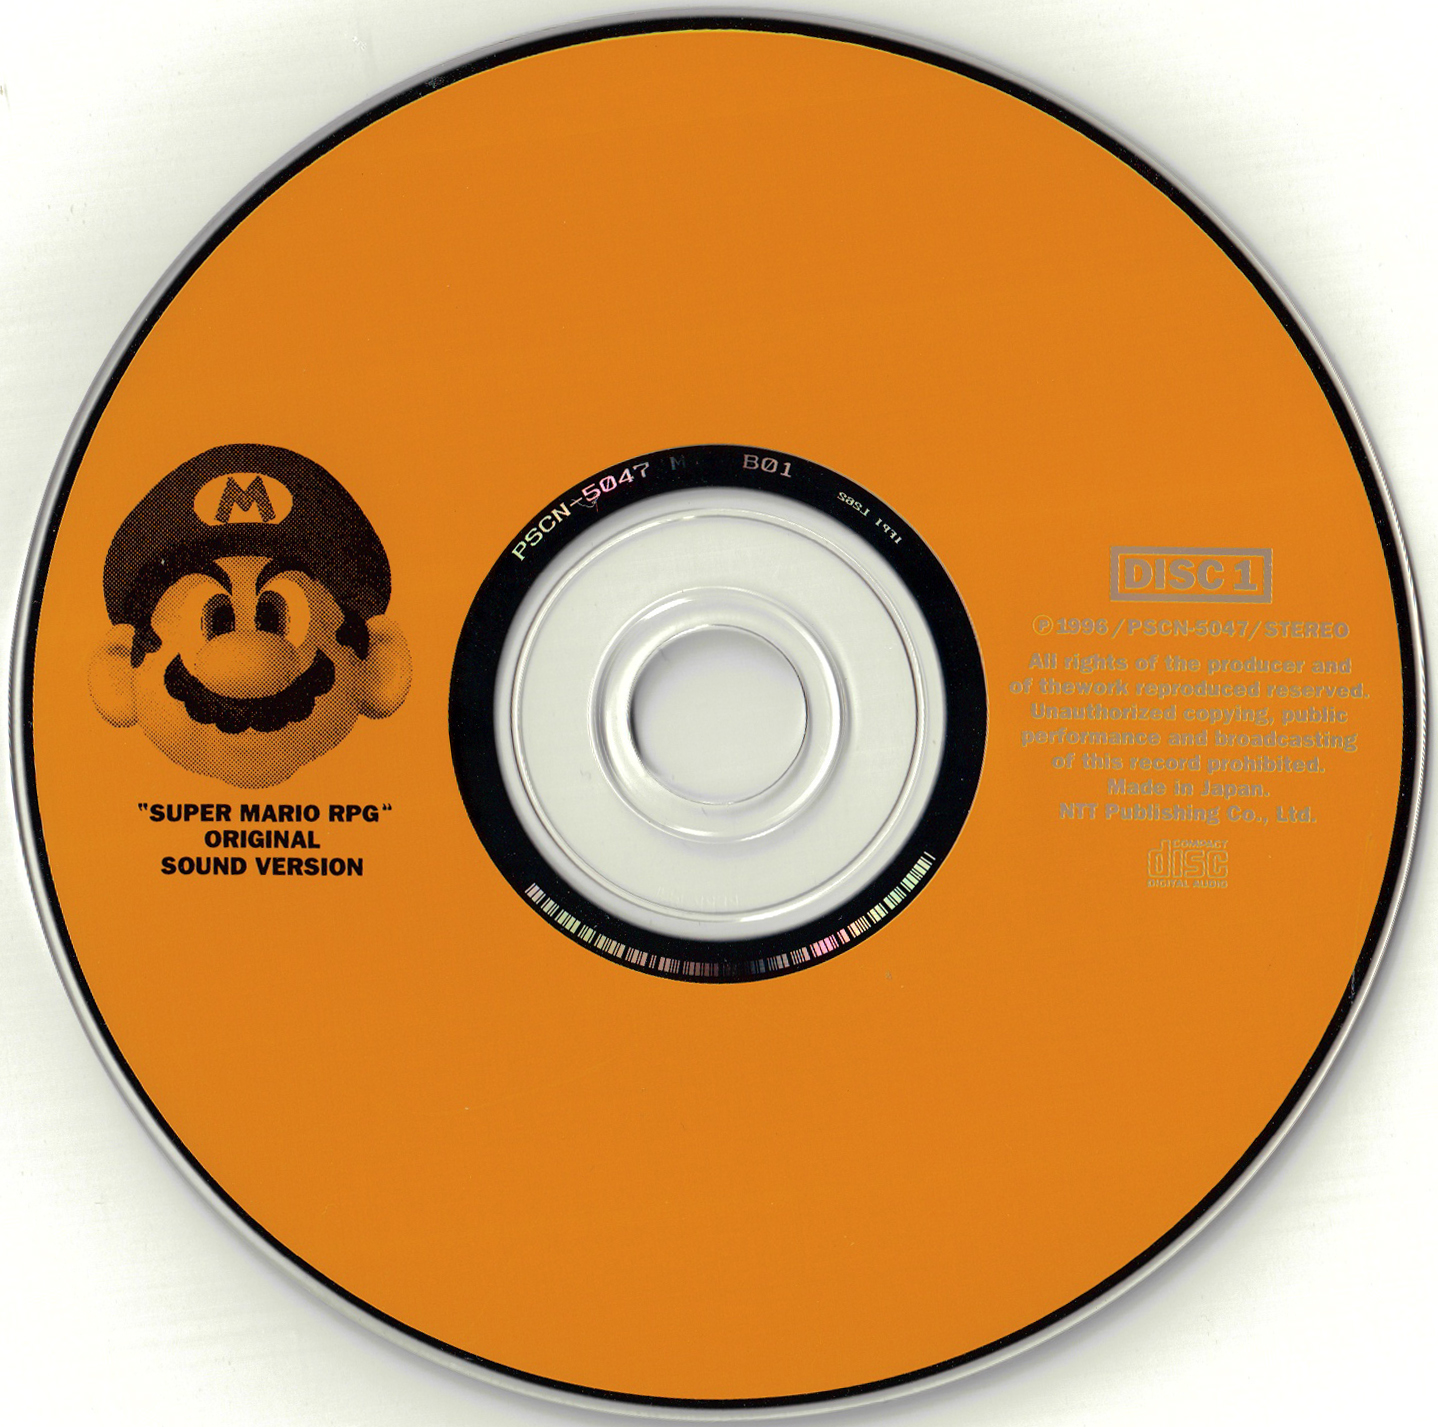 Super Mario RPG Original Sound Version (1996) MP3 - Download Super